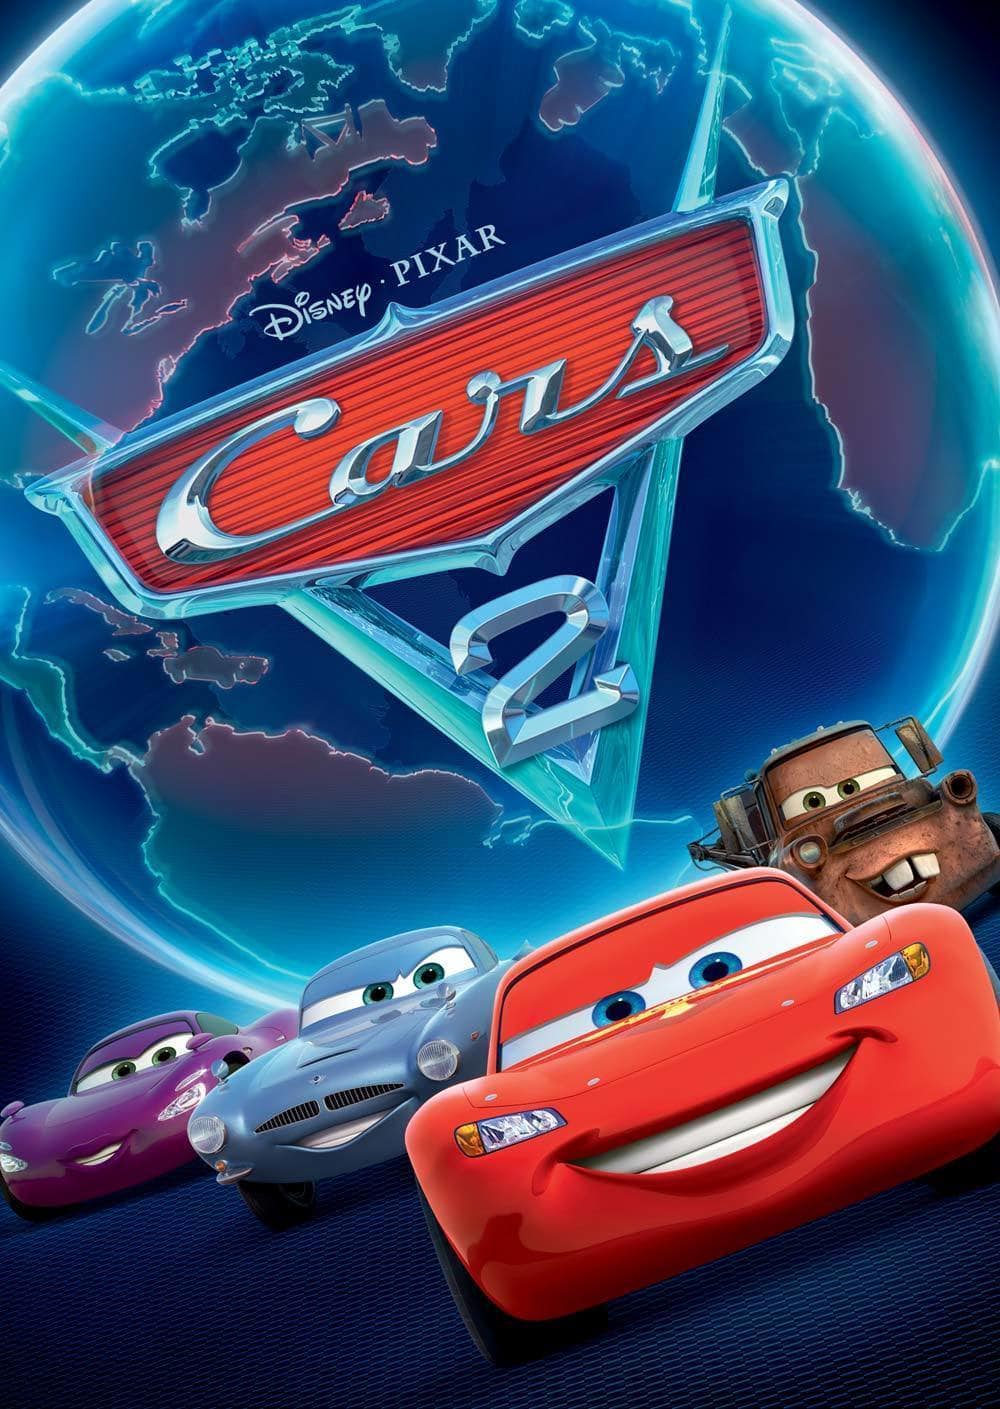 Disney Pixar Cars 2 Logo - Disney•Pixar Cars 2: The Video Game | Disney LOL